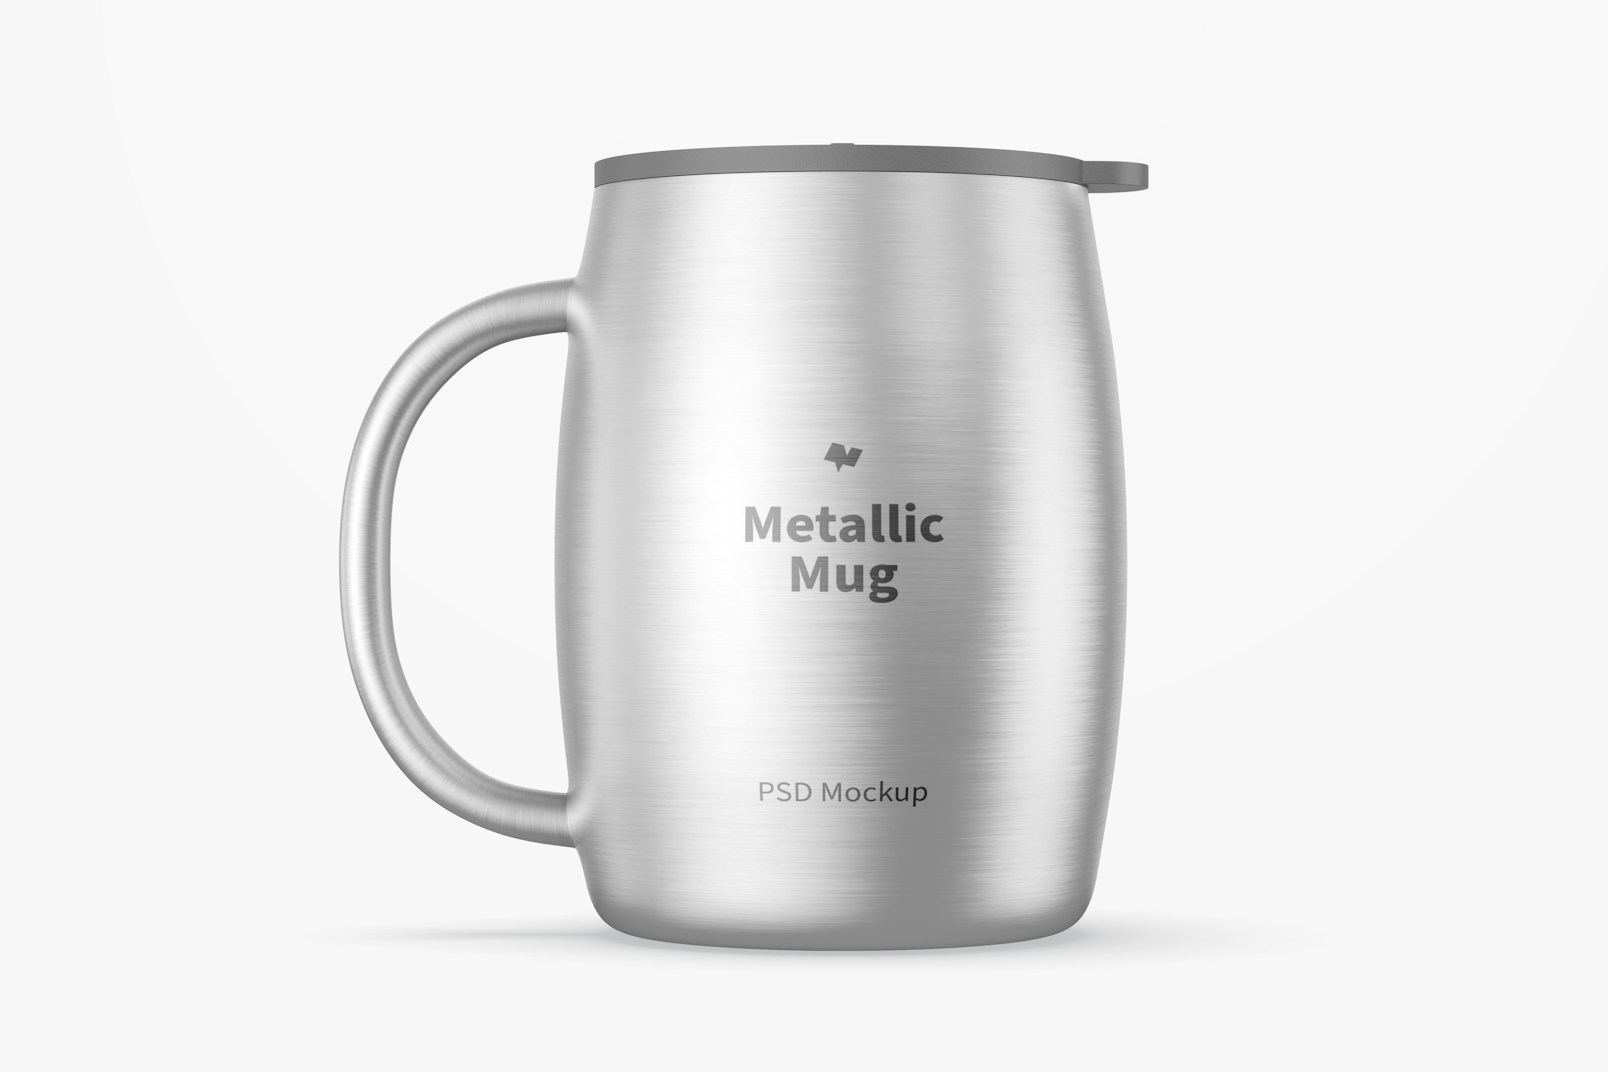 Metallic Mug with Lid Mockup, Front View